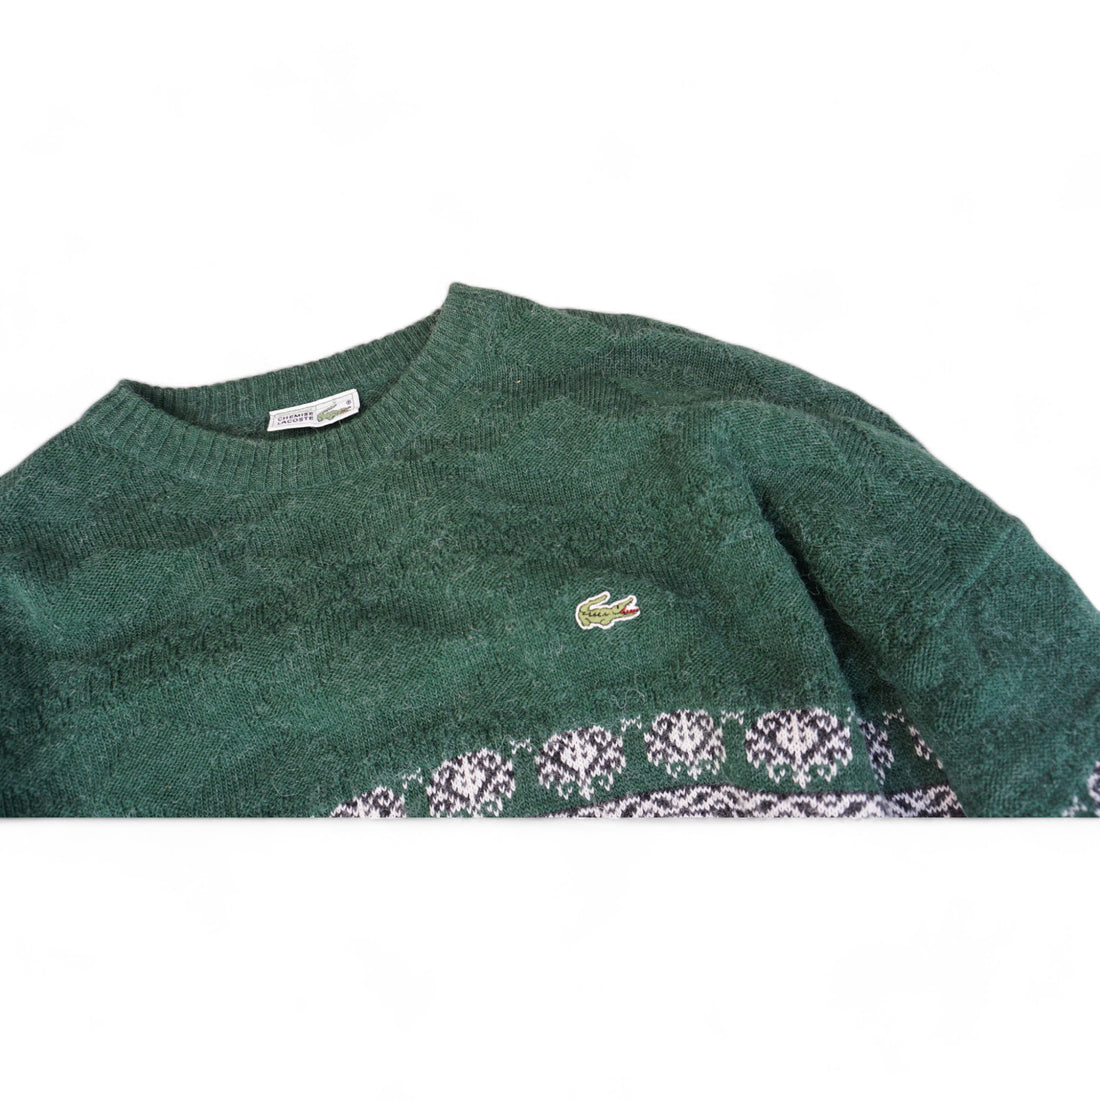 Lacoste Vintage Sweater (L)